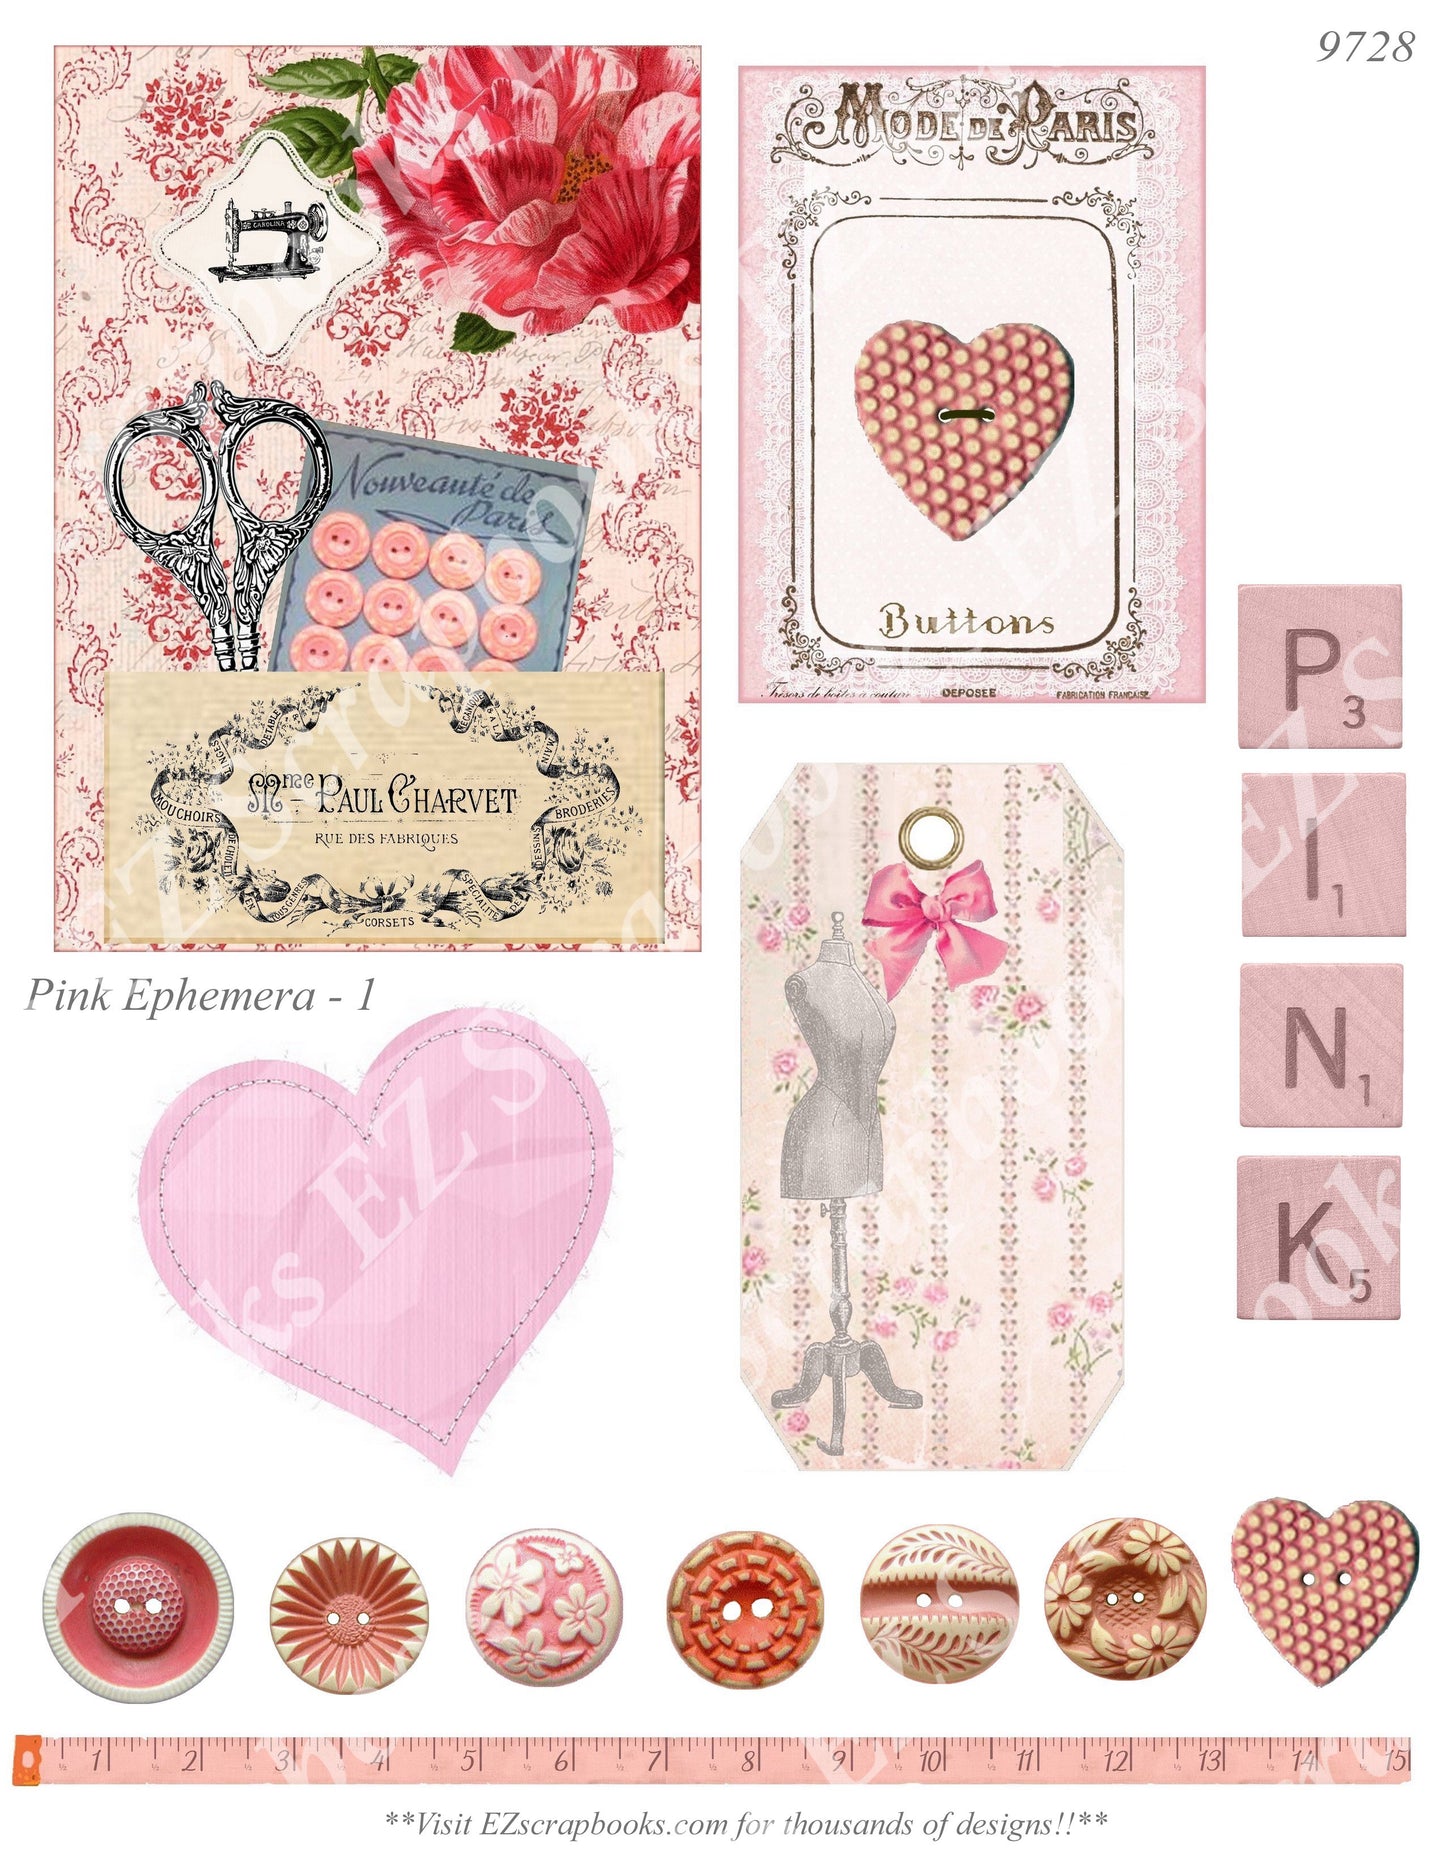 Pink Ephemera - Embellishments - 1 - 9728 - EZscrapbooks Scrapbook Layouts Ephemera